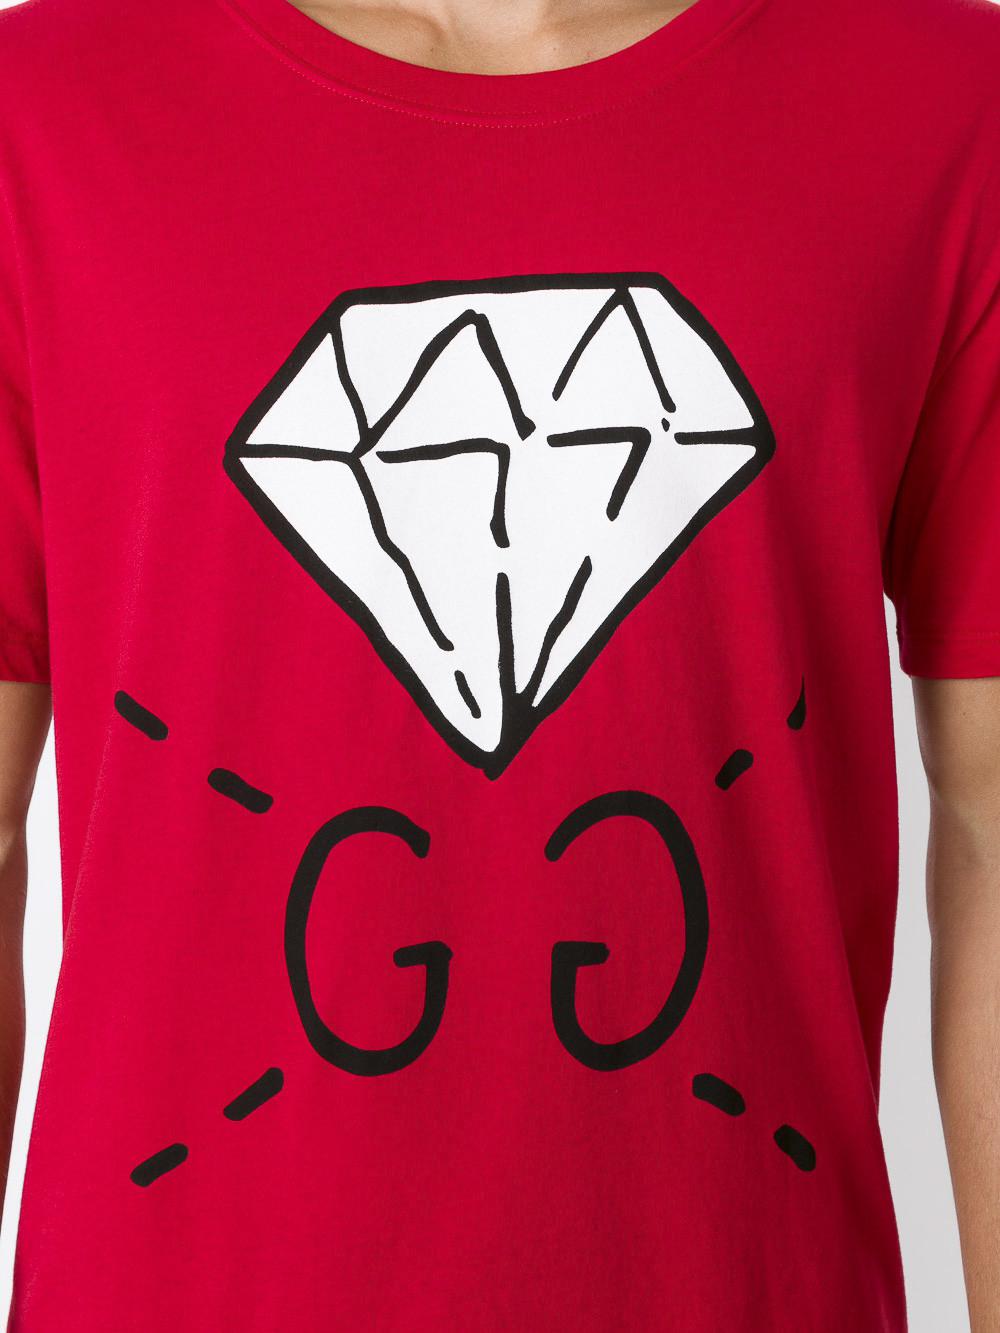 gucci gg diamond t shirt